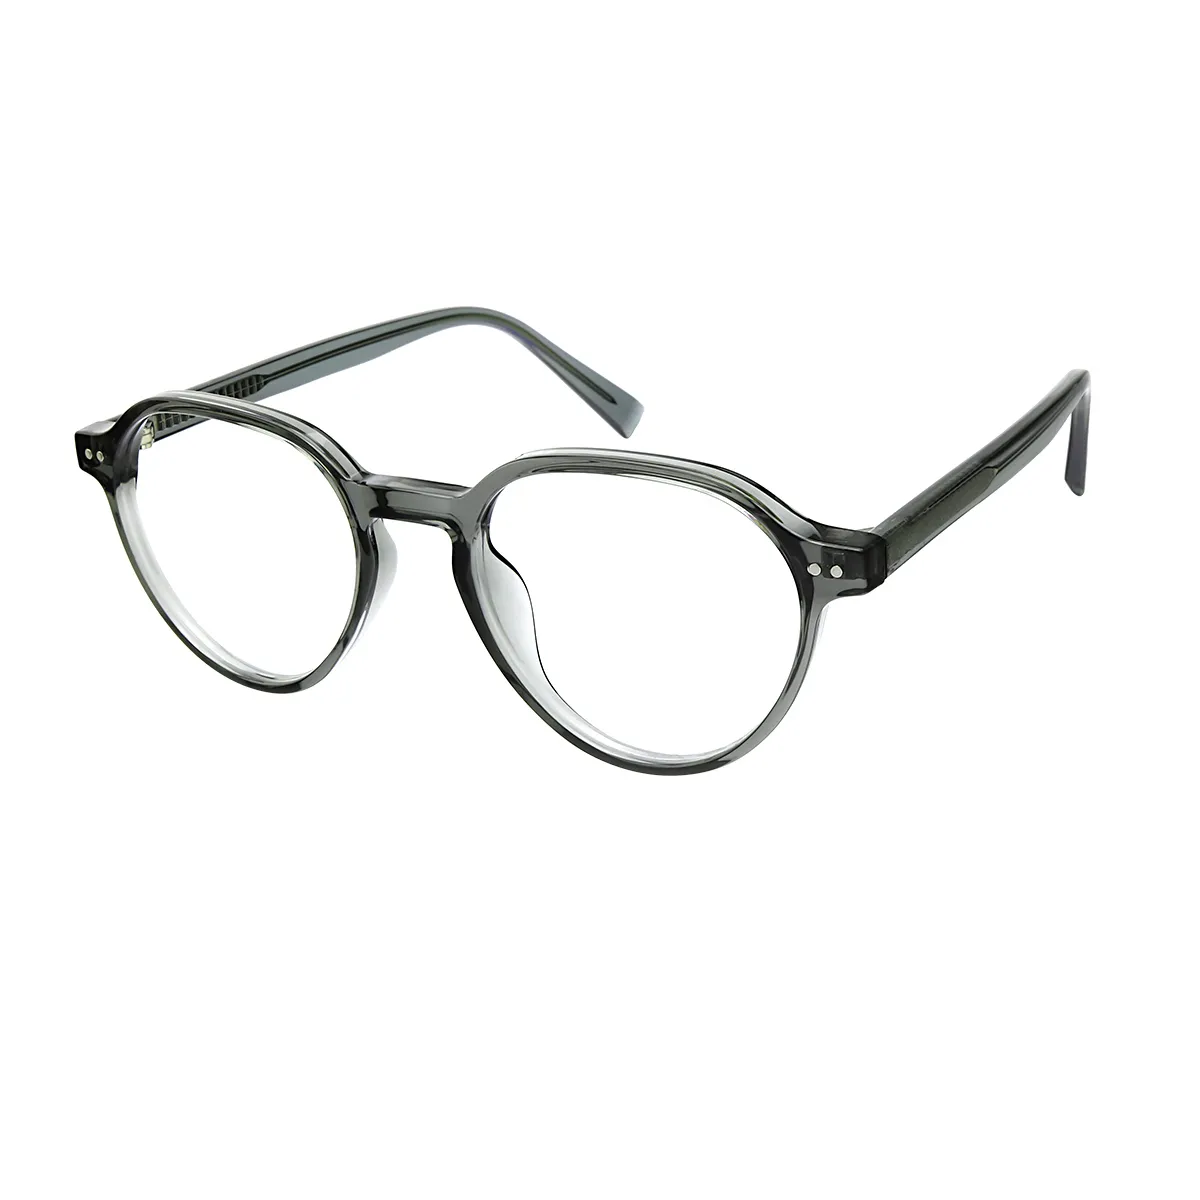 Emotion - Round Grey-Transparent Glasses for Men & Women